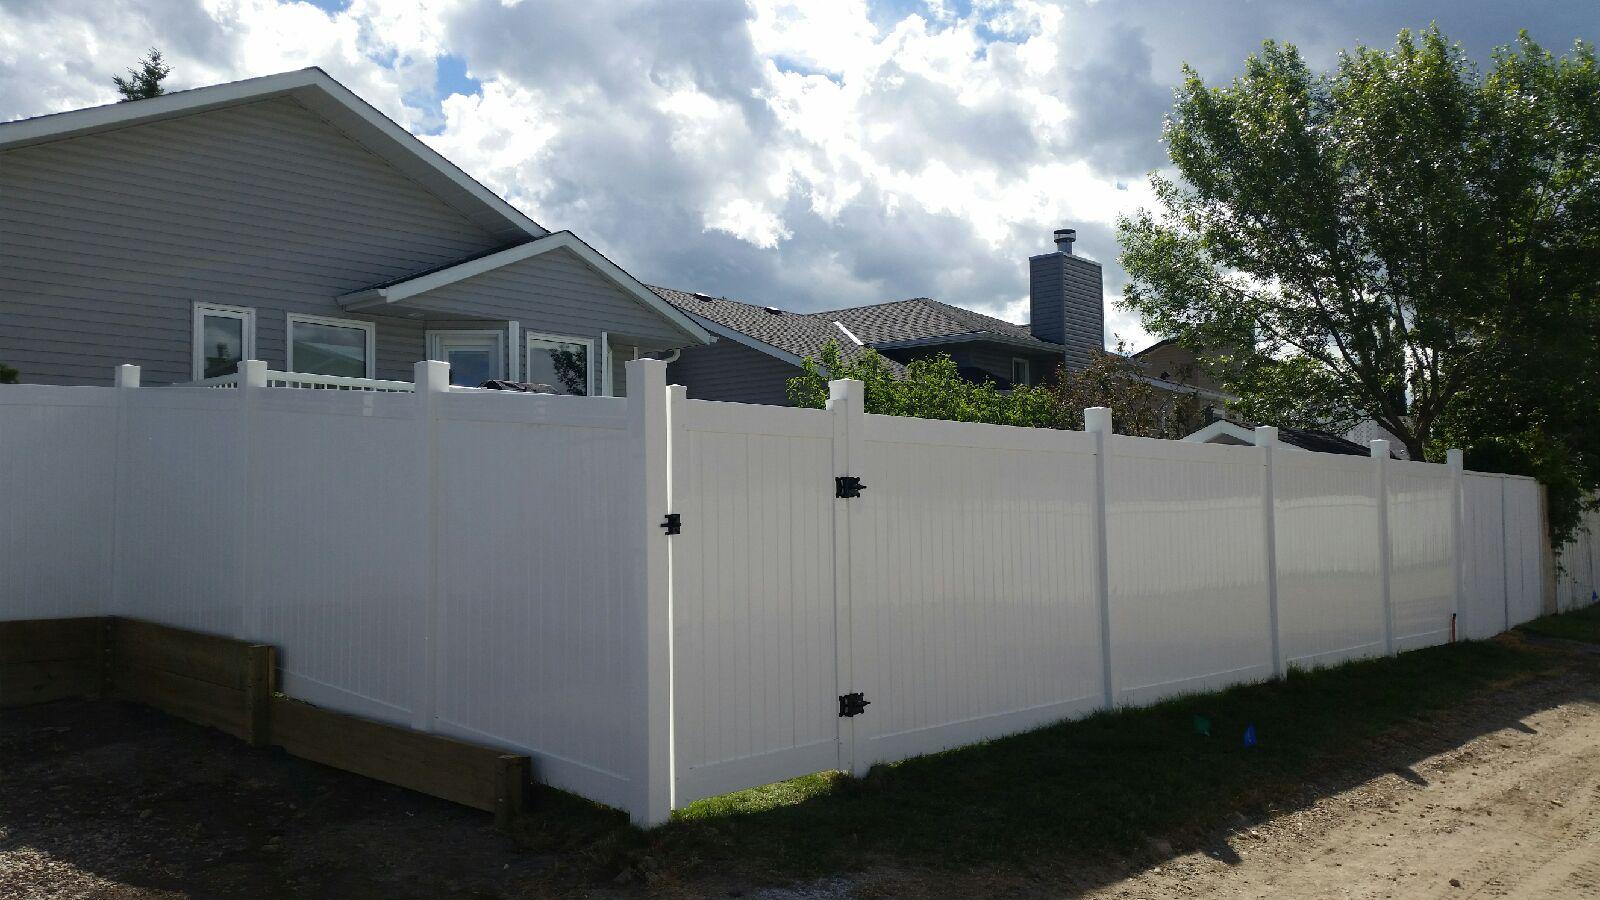 White vinyl privacy fence